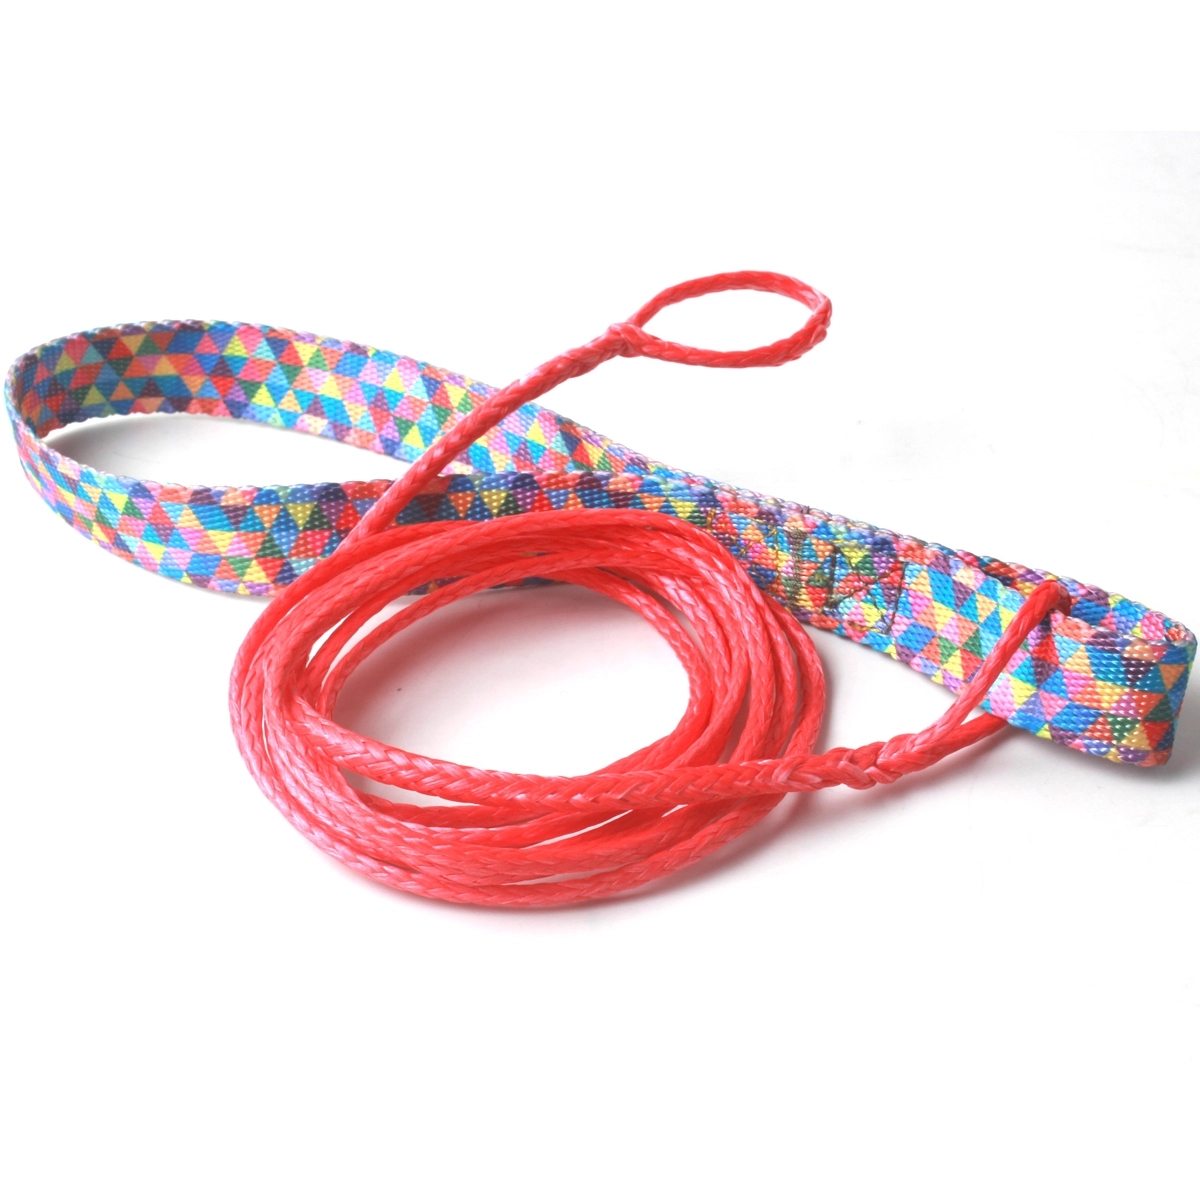 UHMWPE braid rope for dog leash